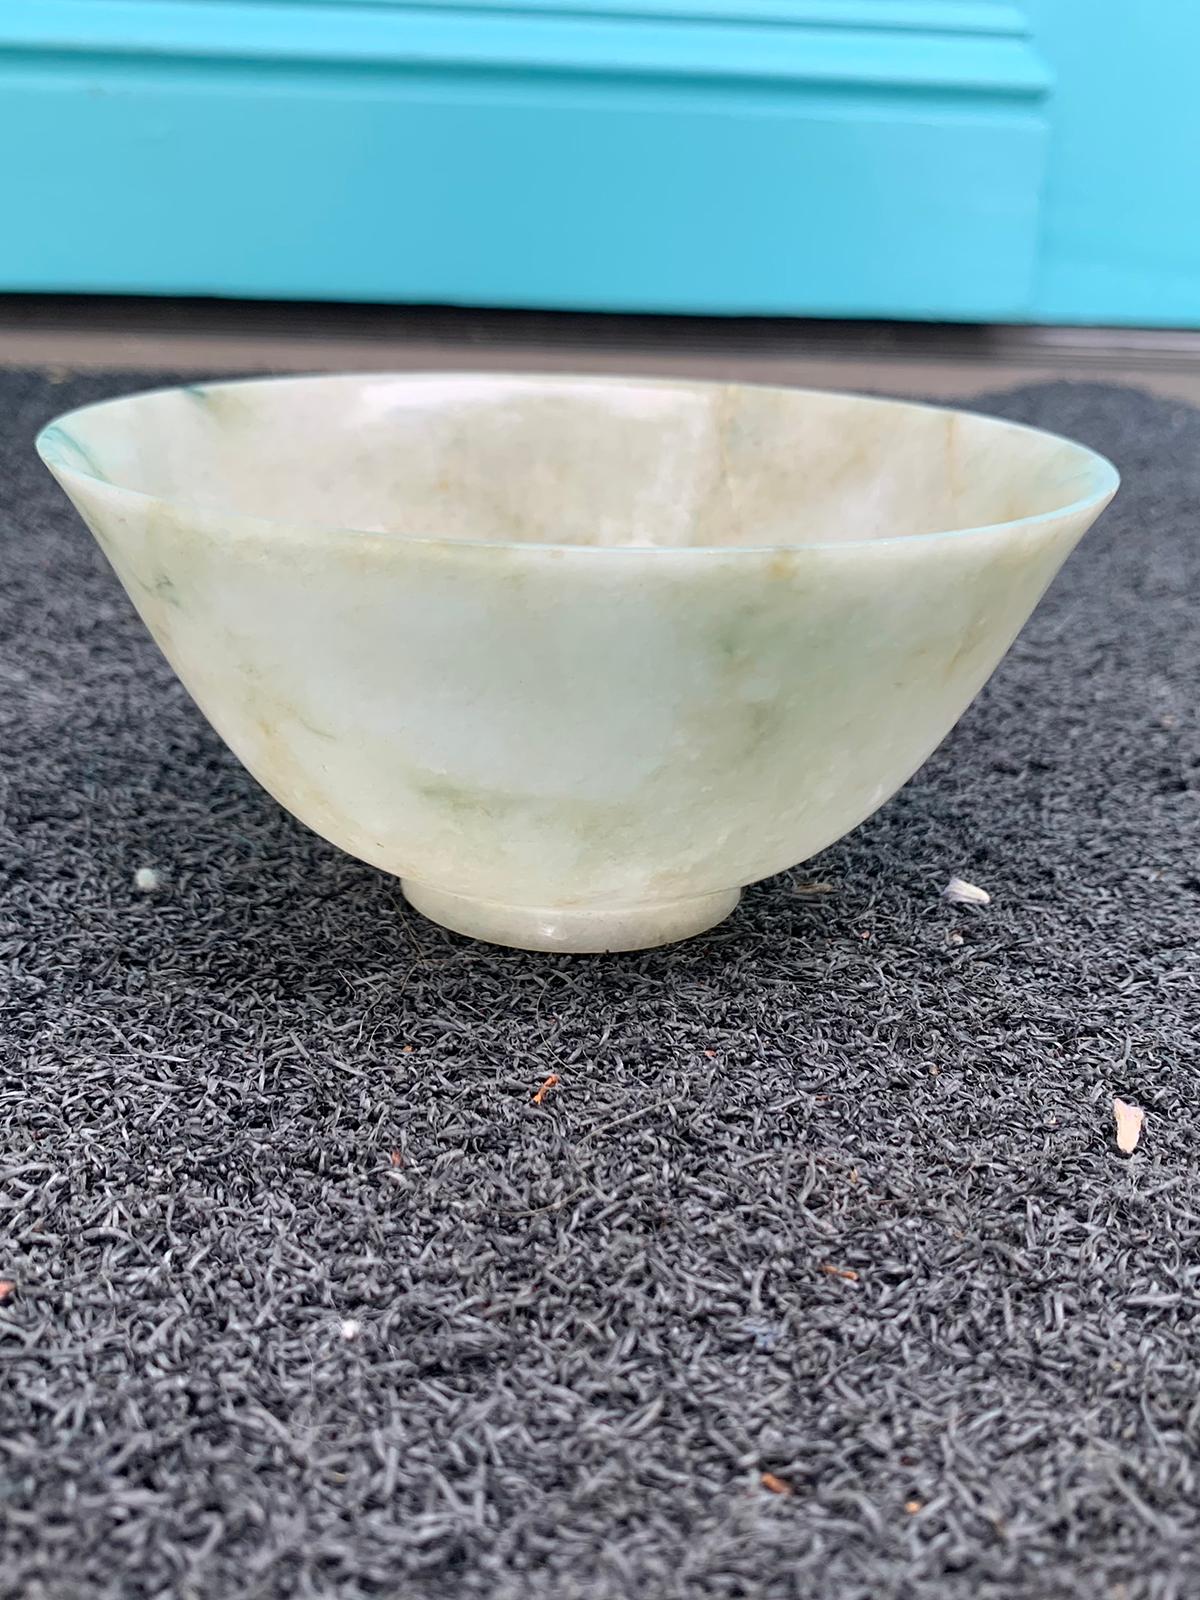 19th-20th century jade bowl.